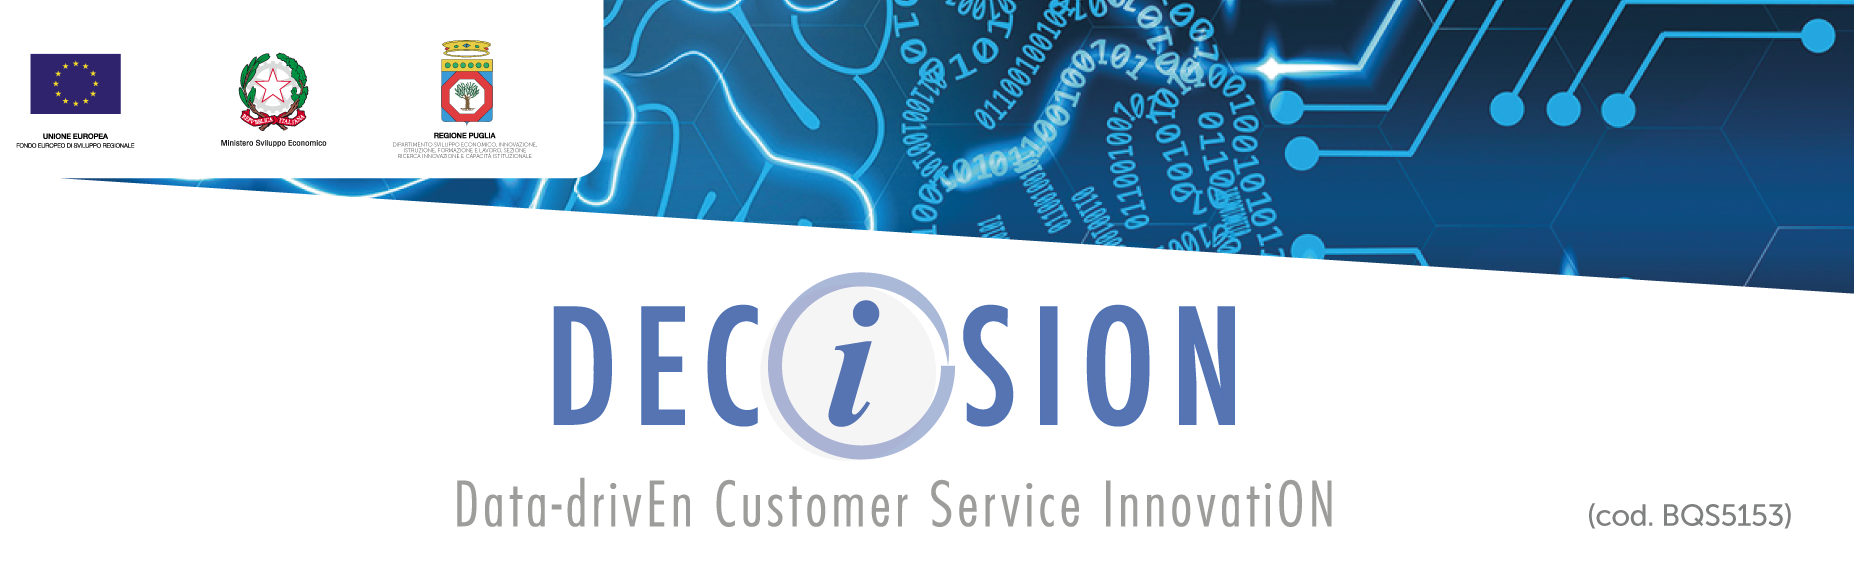 DECiSION - Data-drivEn Customer Service InnovatiON